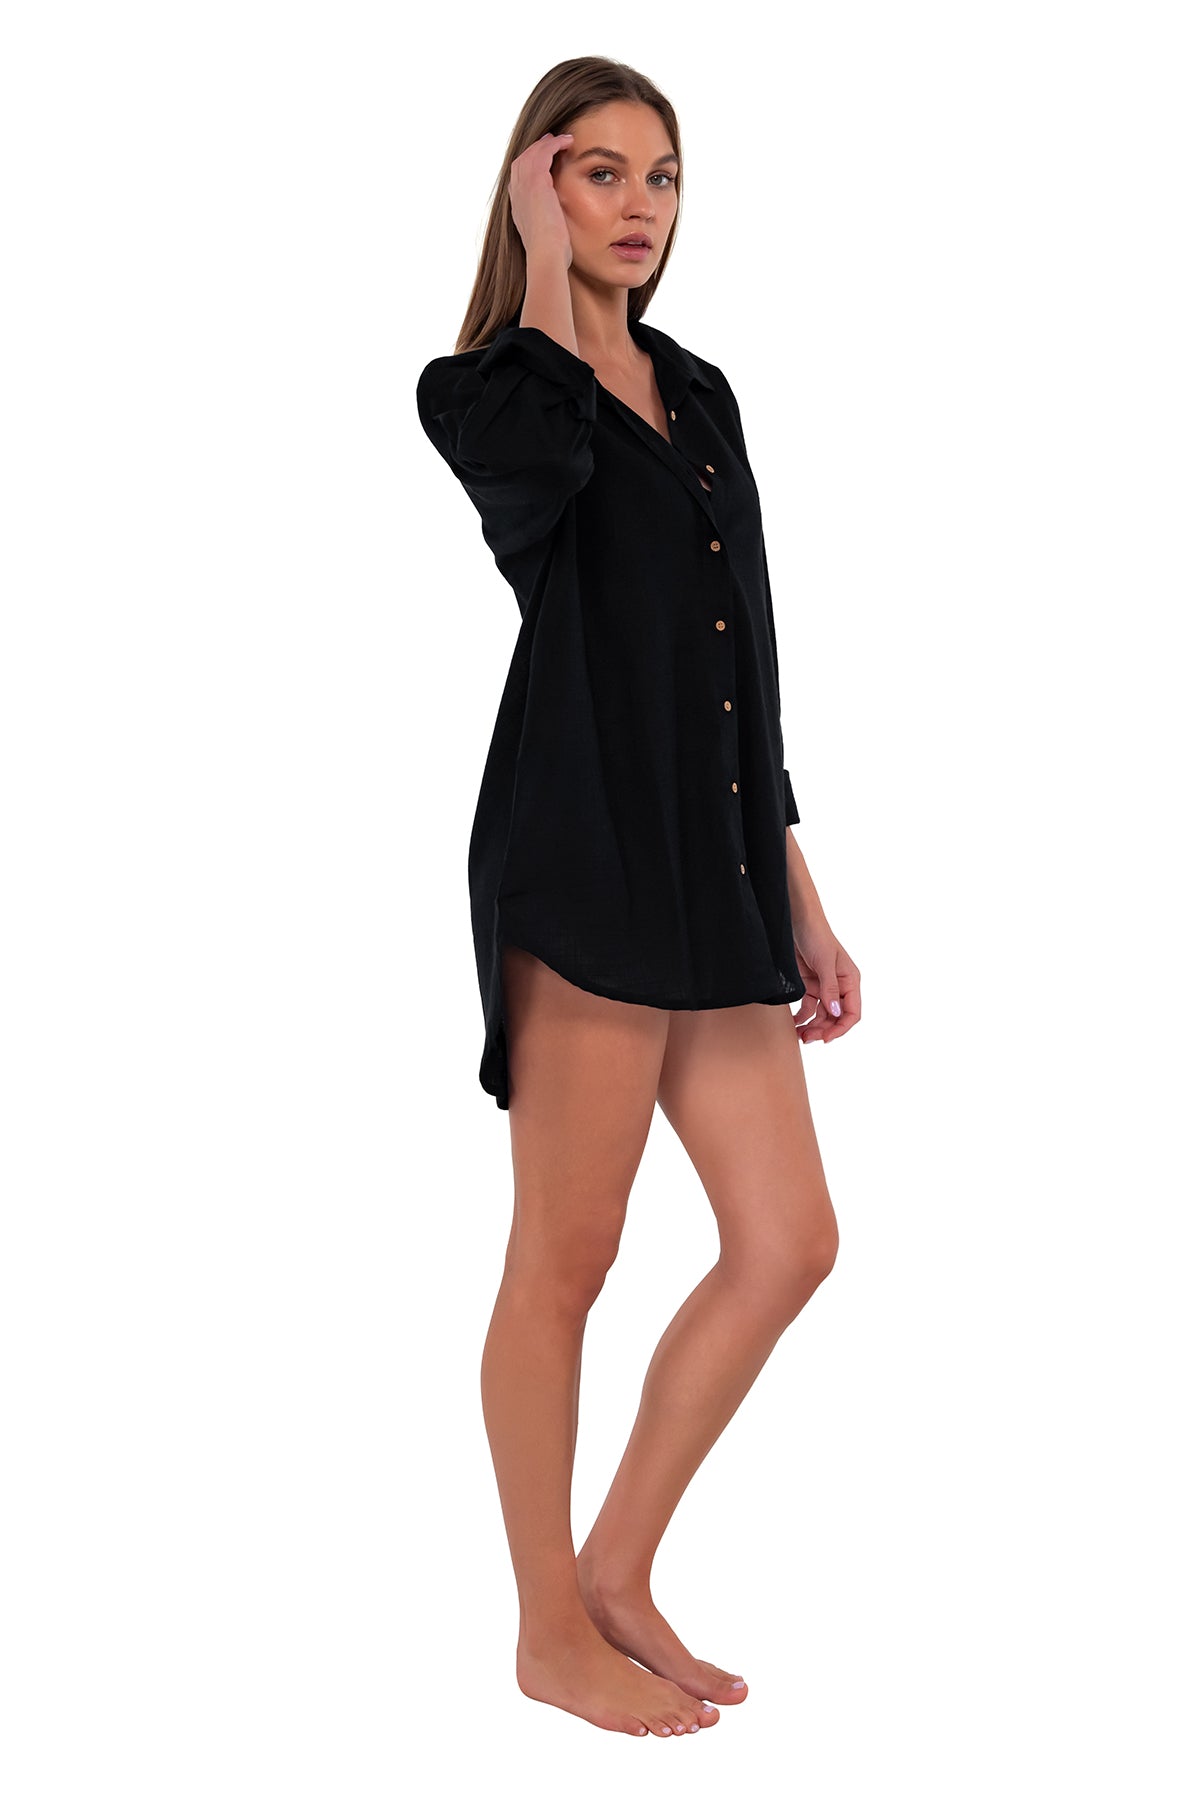 Side pose #1 of Daria wearing Sunsets Black Delilah Shirt